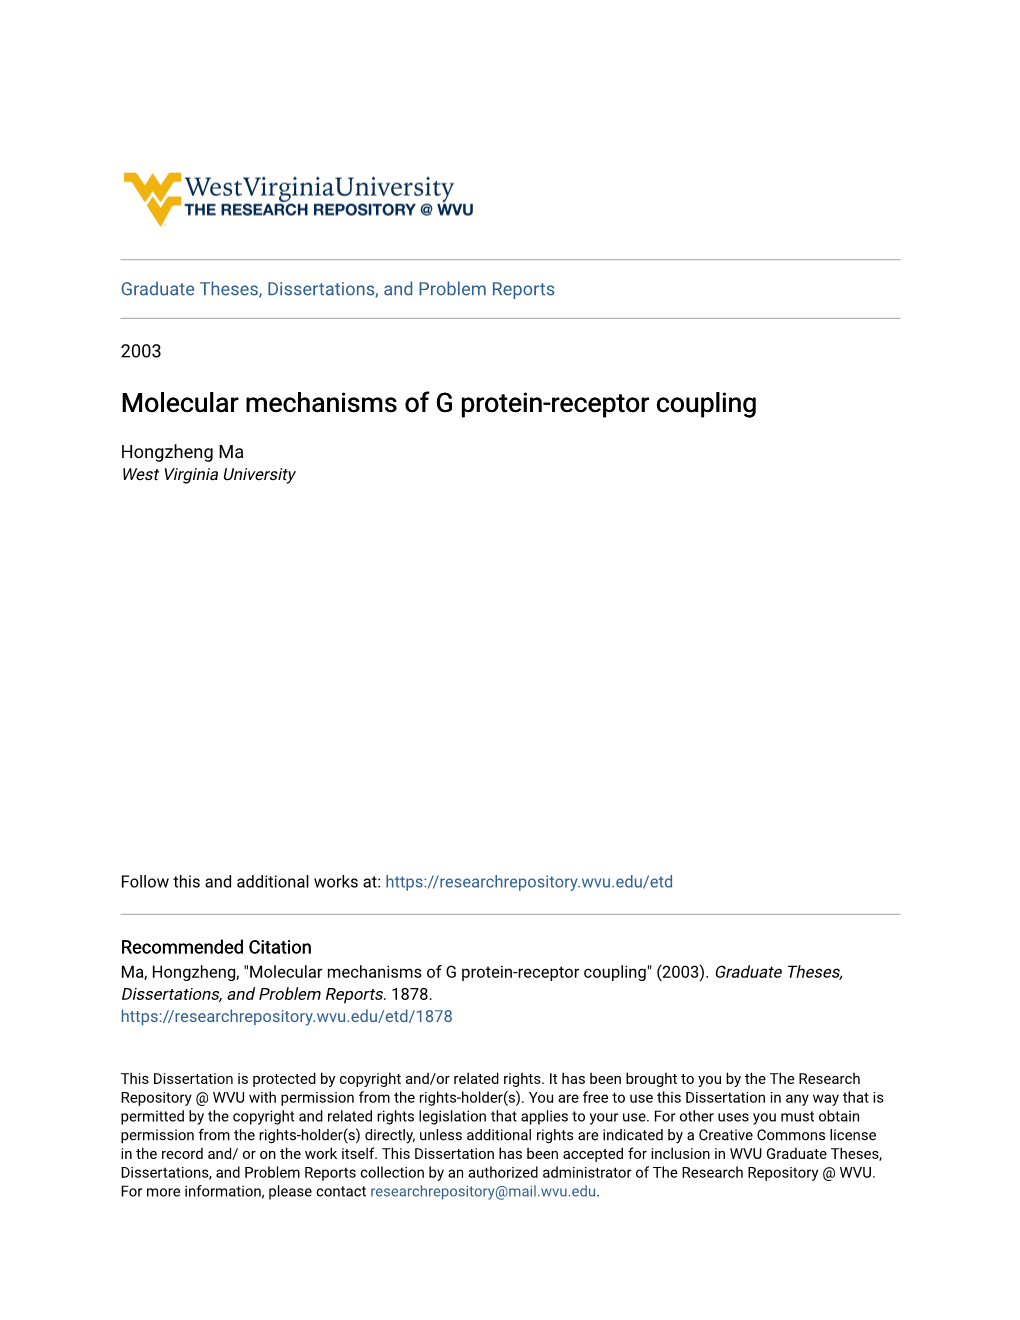 Molecular Mechanisms of G Protein-Receptor Coupling